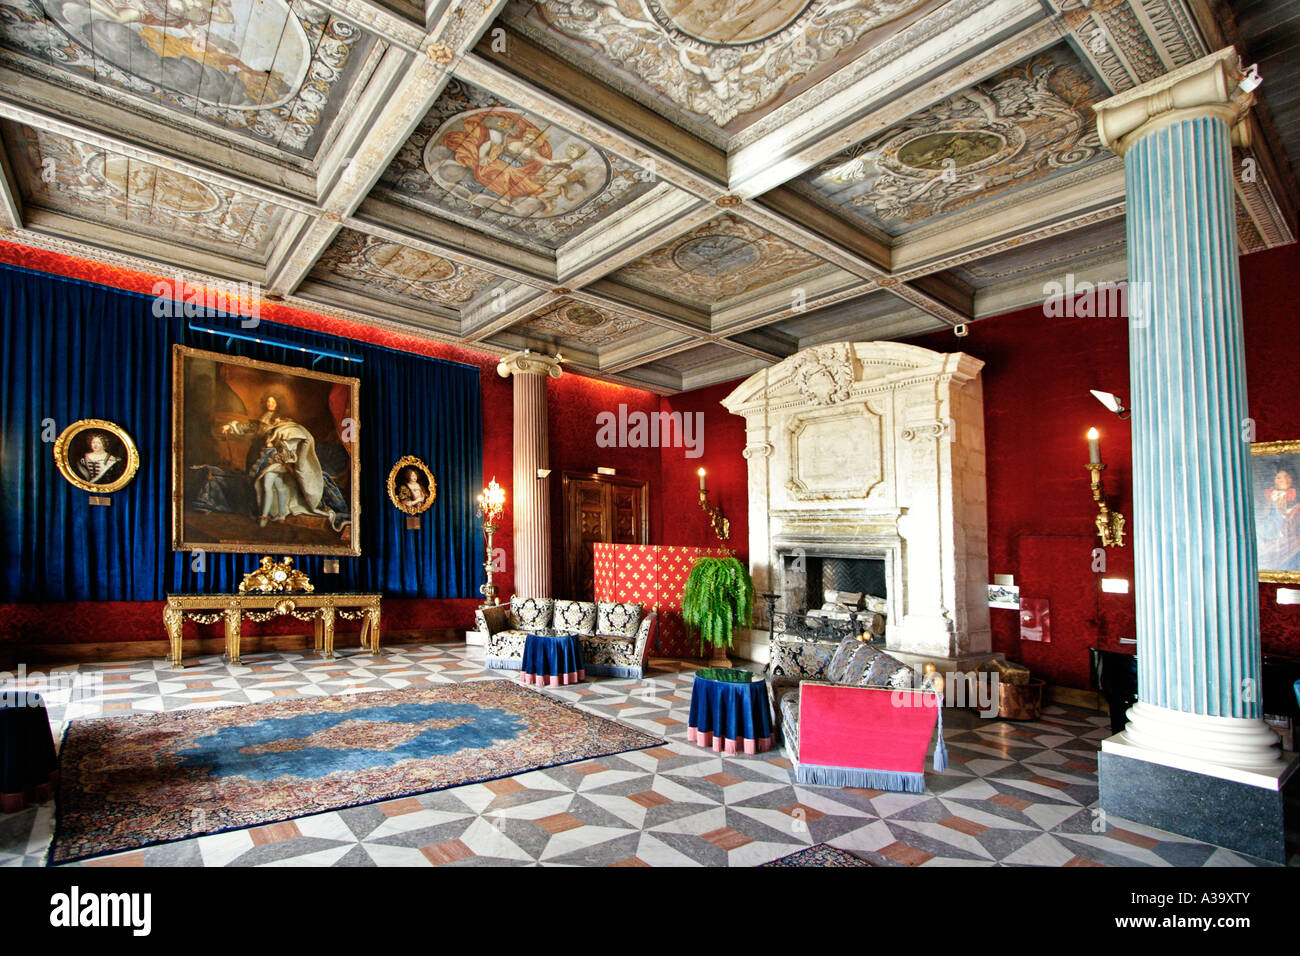 Frankreich Nizza Promenade des Anglais Hotel Negresco Interieur Luxus Salon Stockfoto